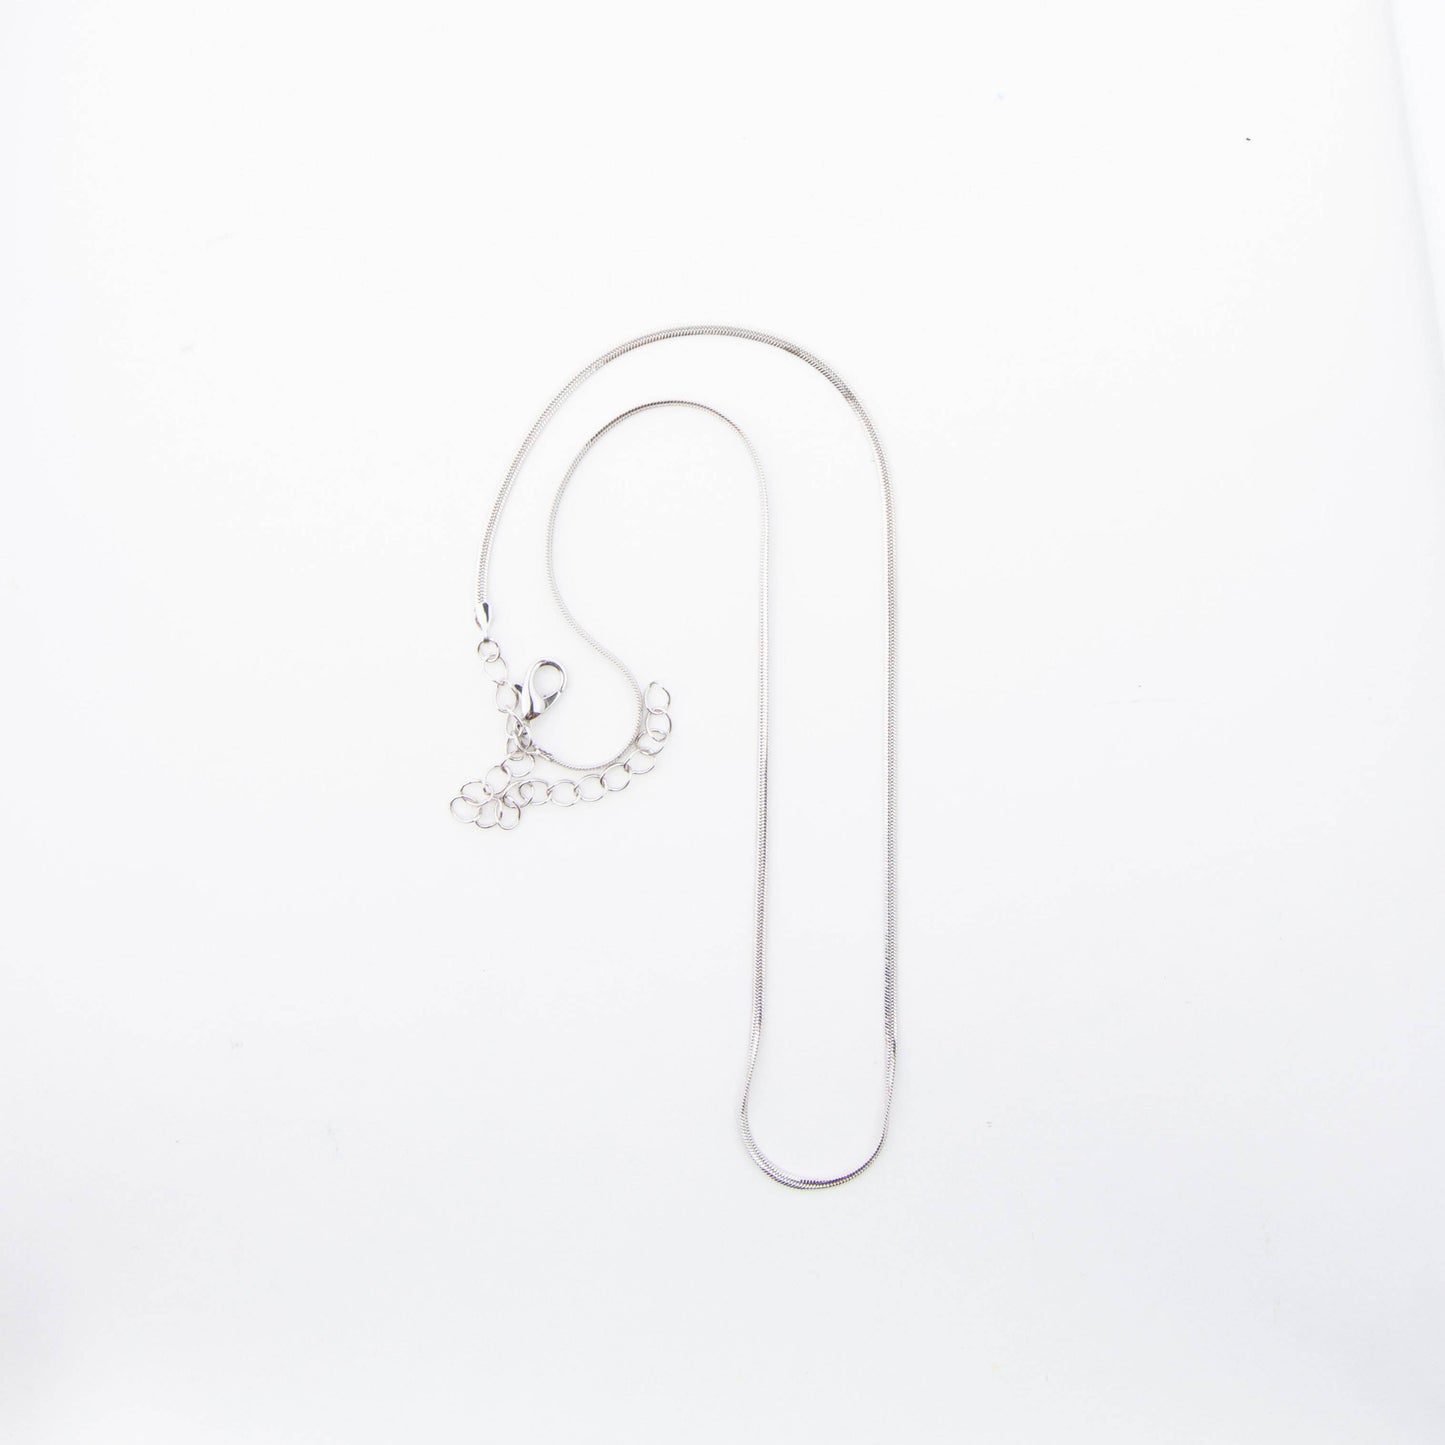 Silver 18" Herringbone Chain Necklace